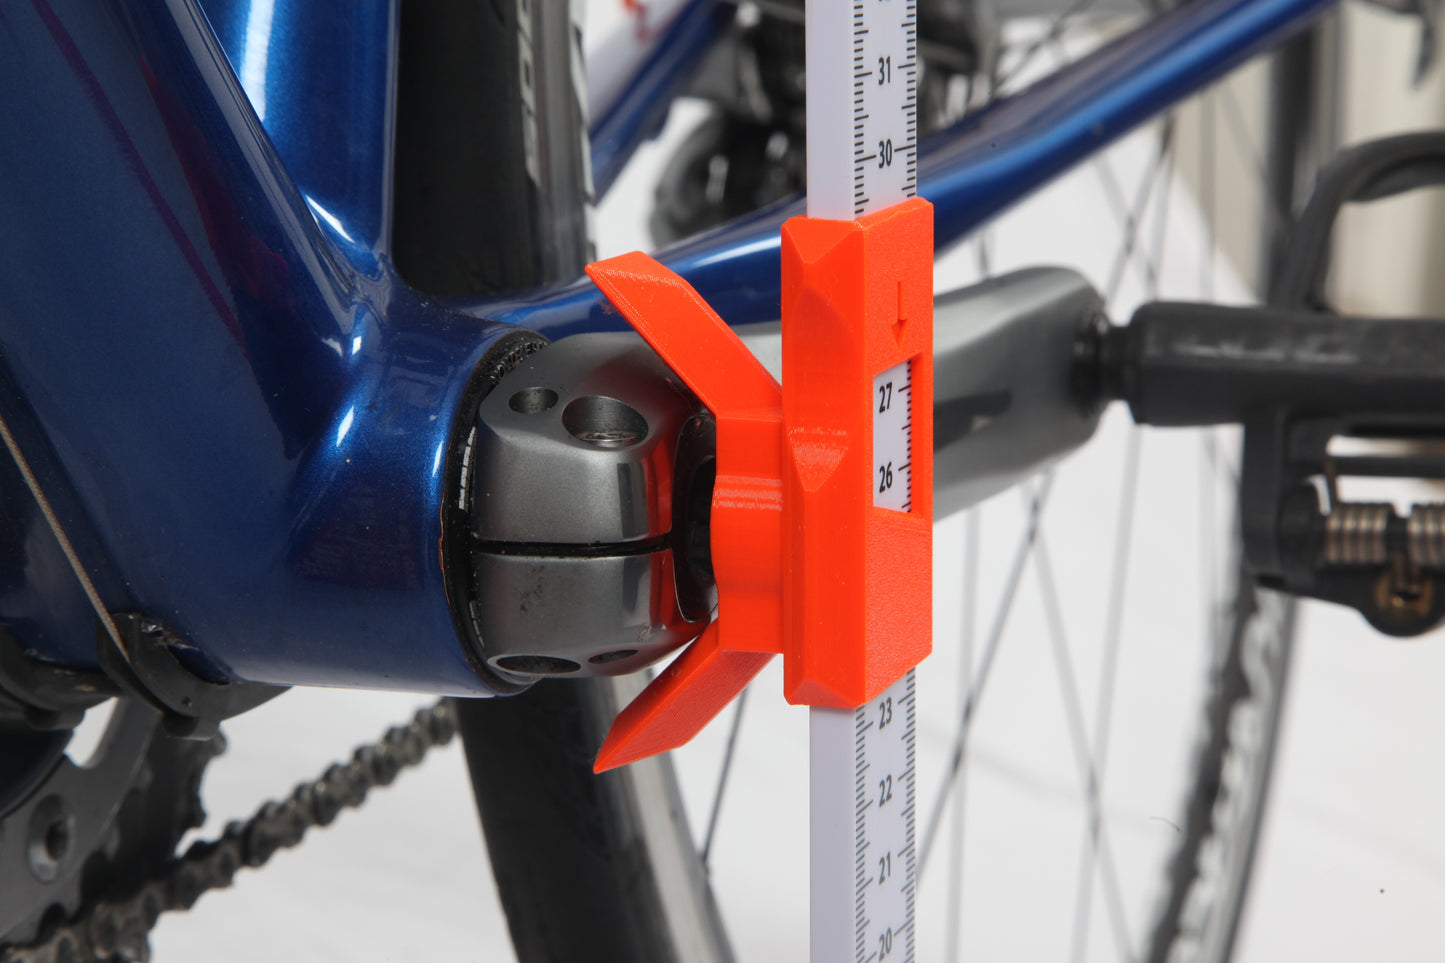 Bike Measurement and setup tool (Australia only)